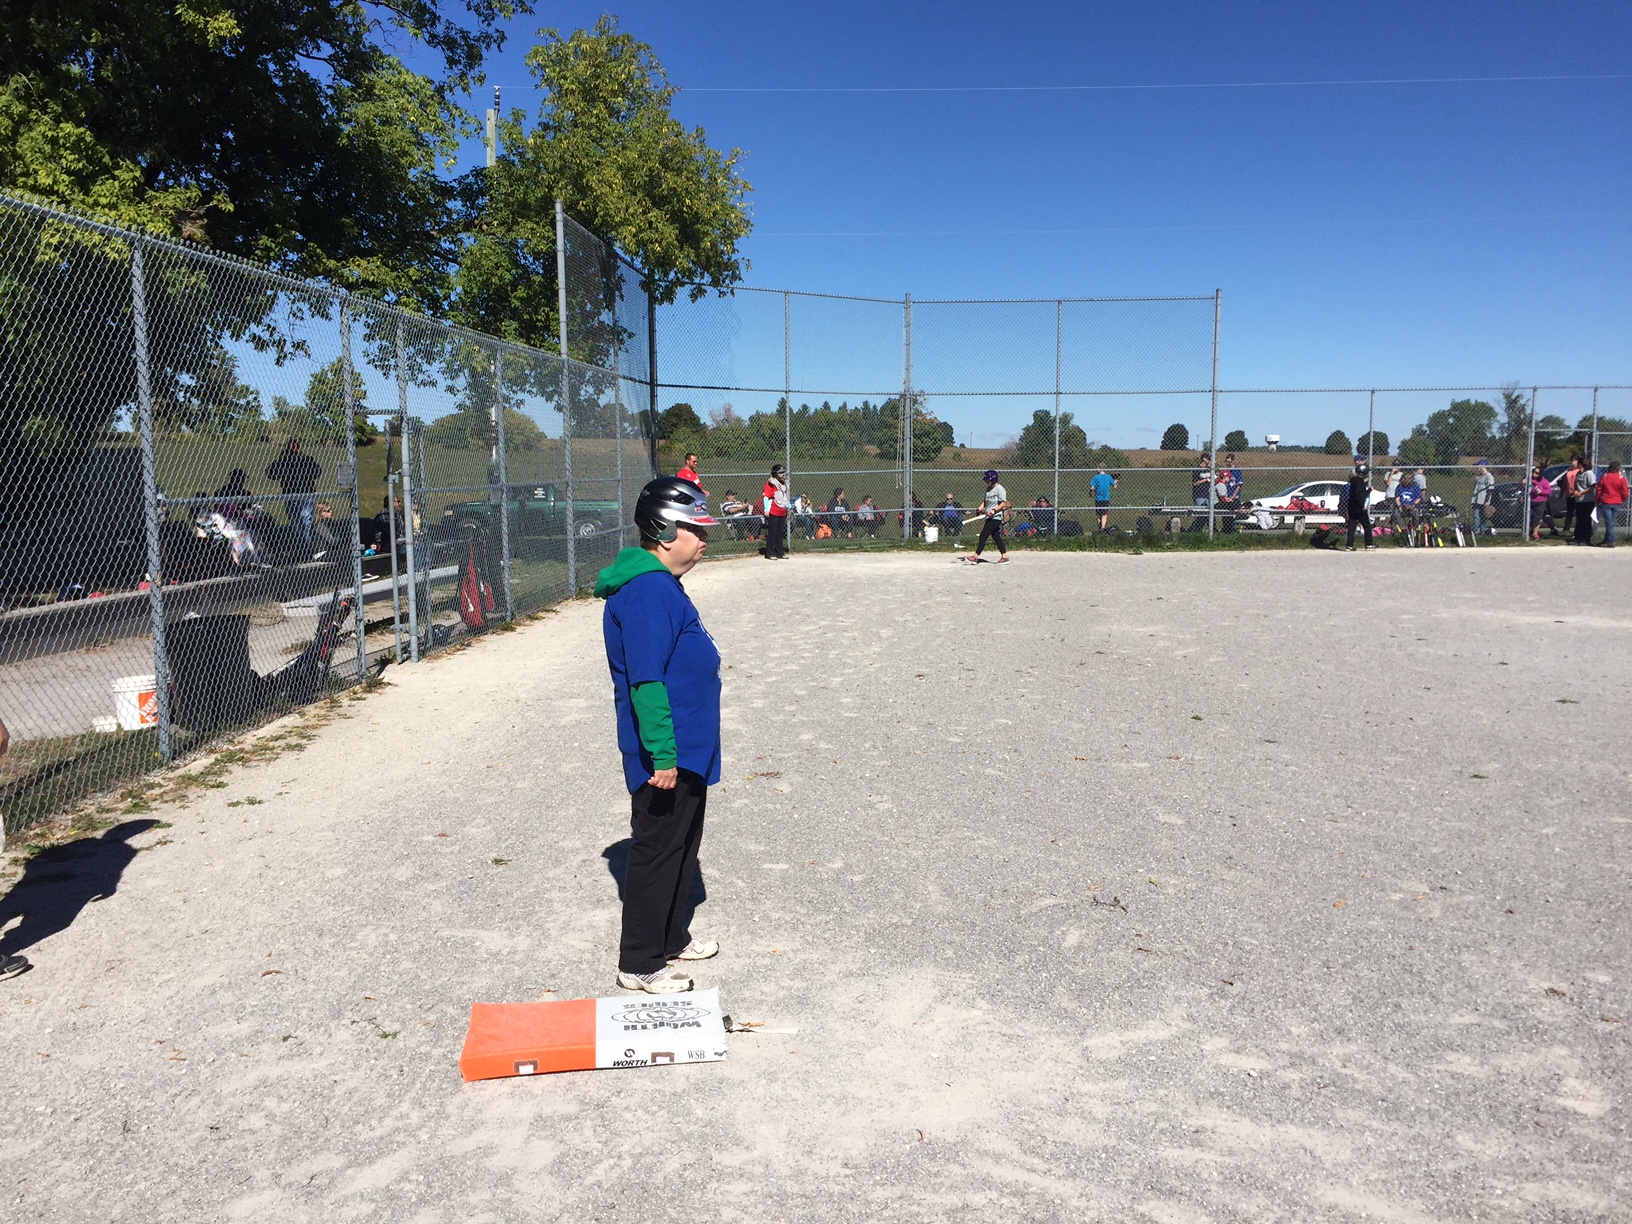 Baseball Tournament Participant on base